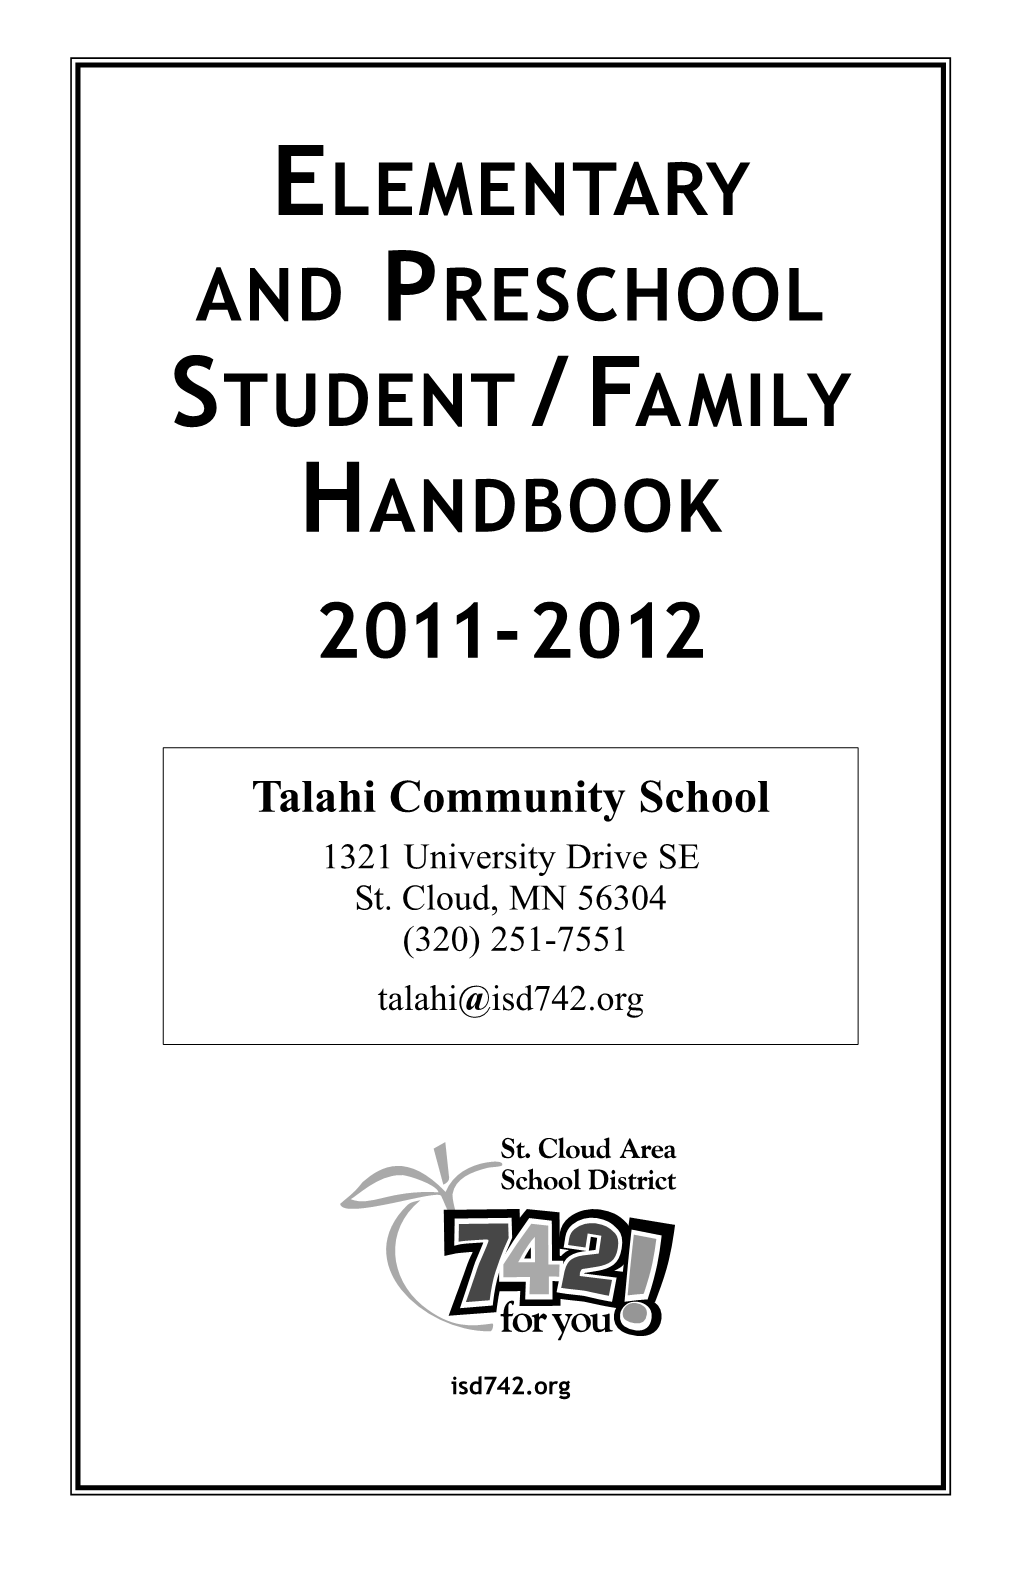 Elementary and Preschool Student /Family Handbook 2011- 2012